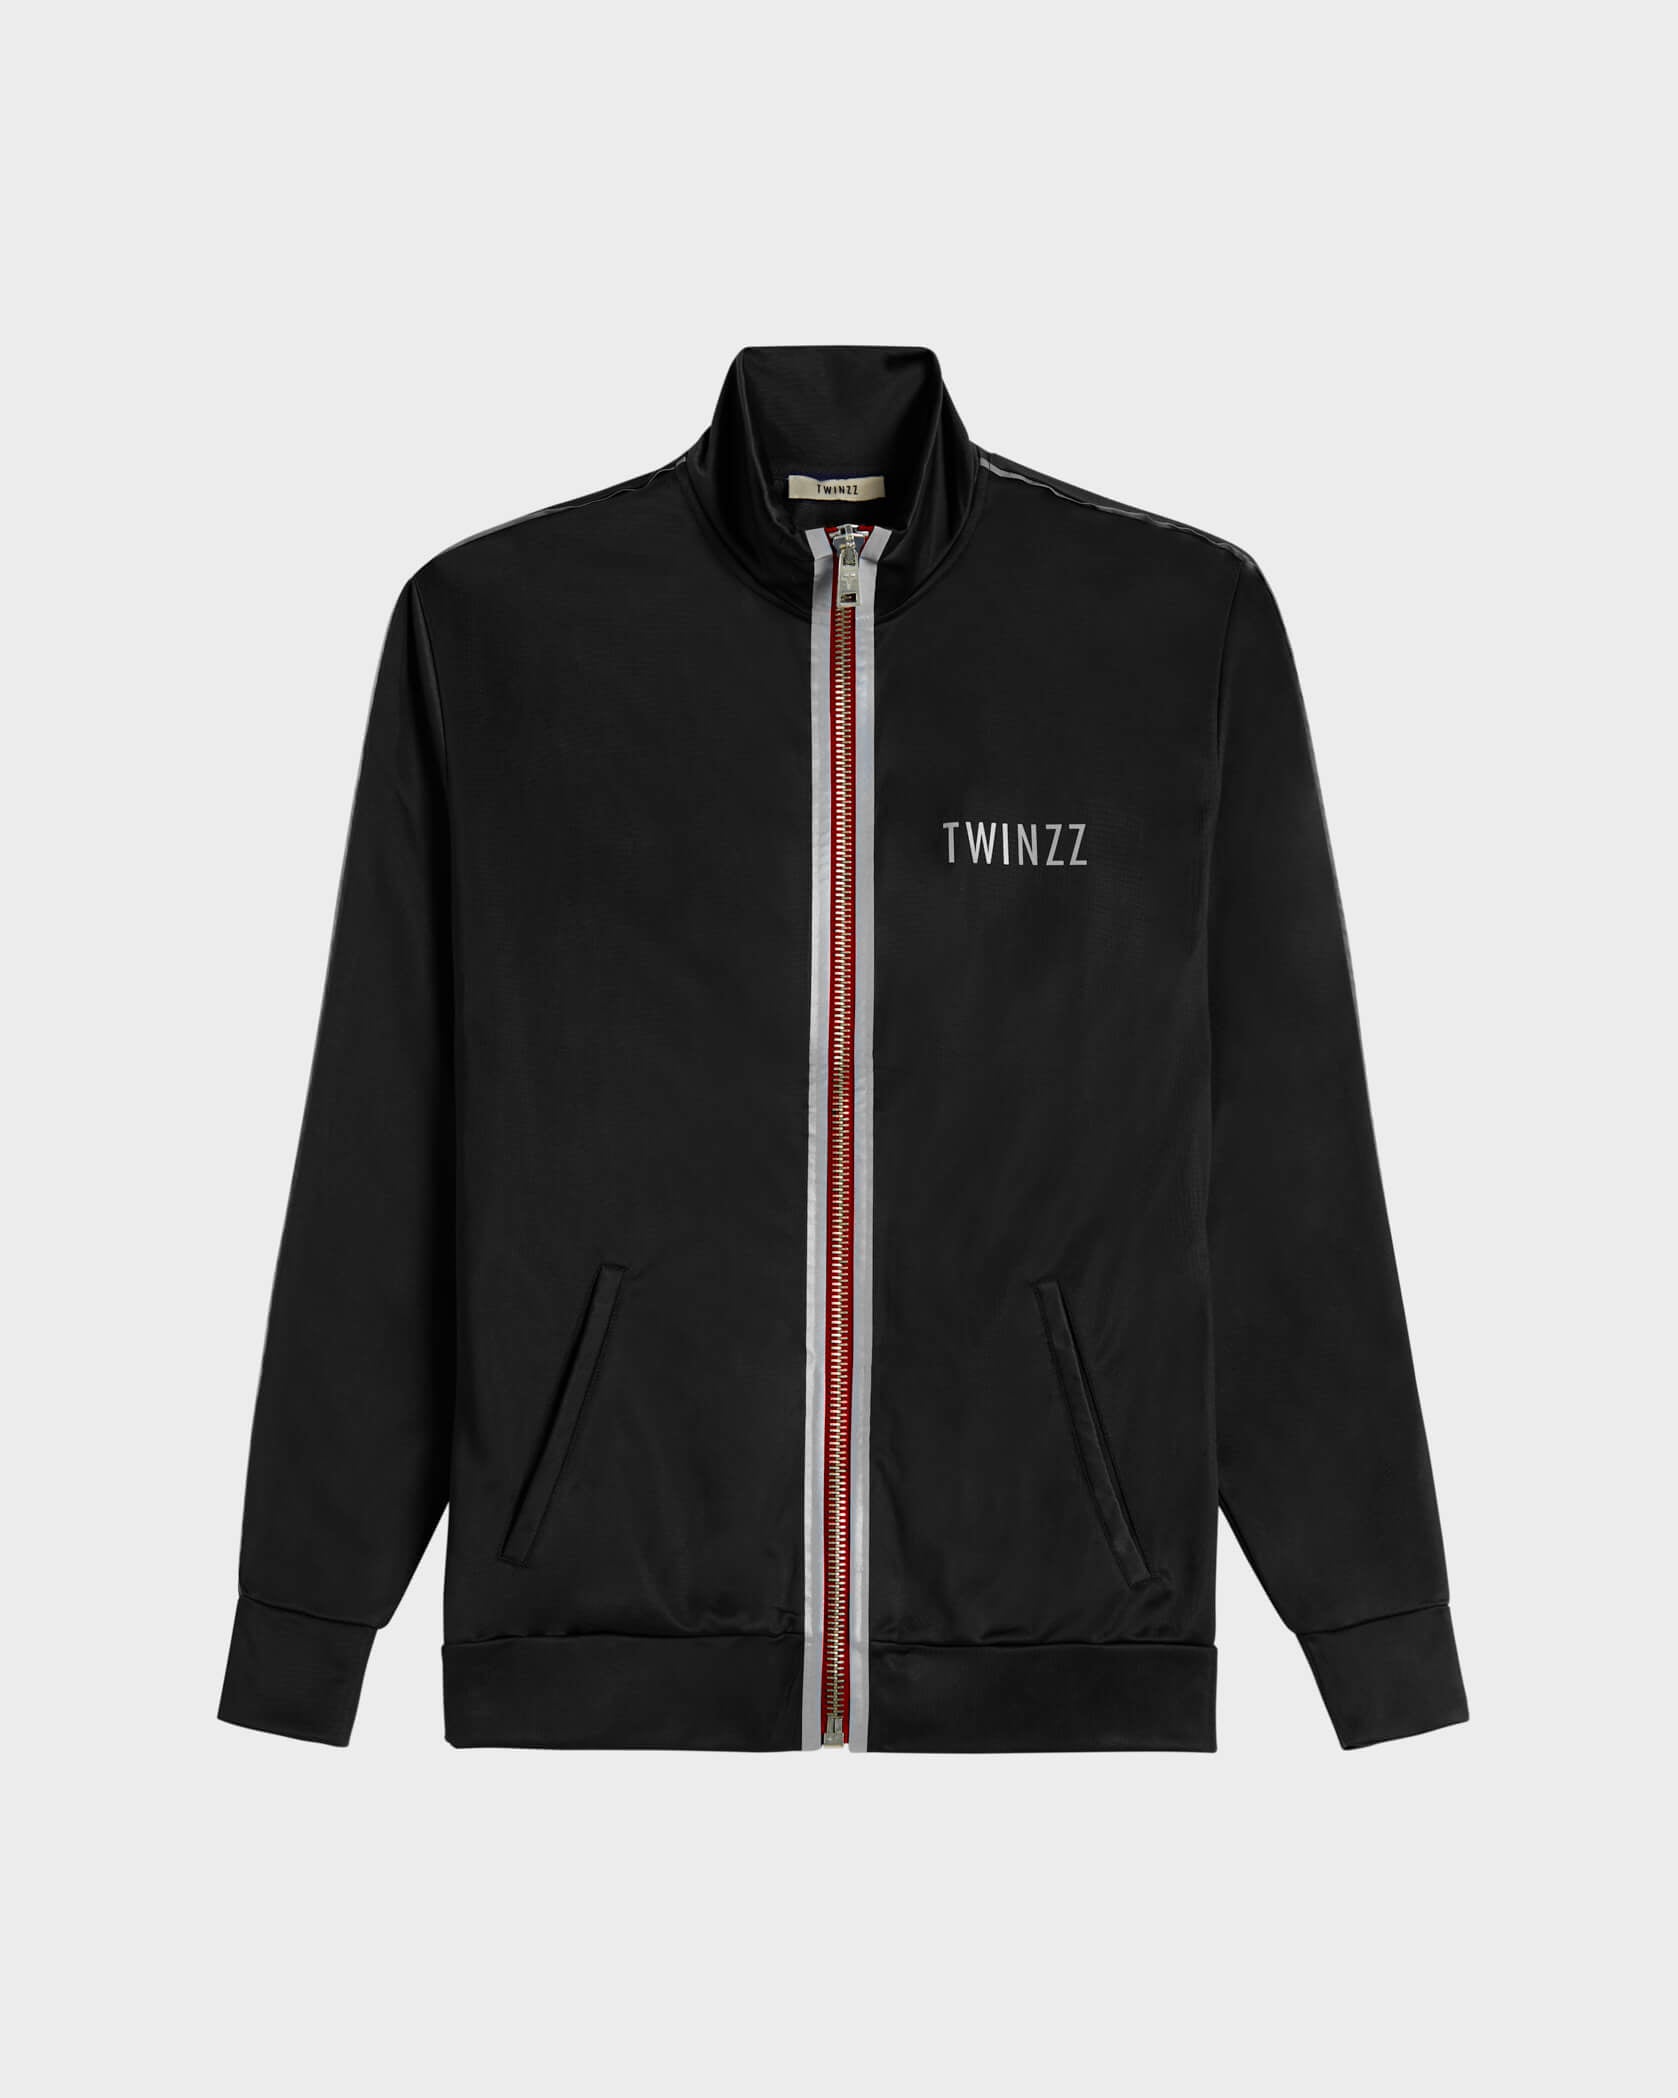 Twinzz Tech black track jacket front